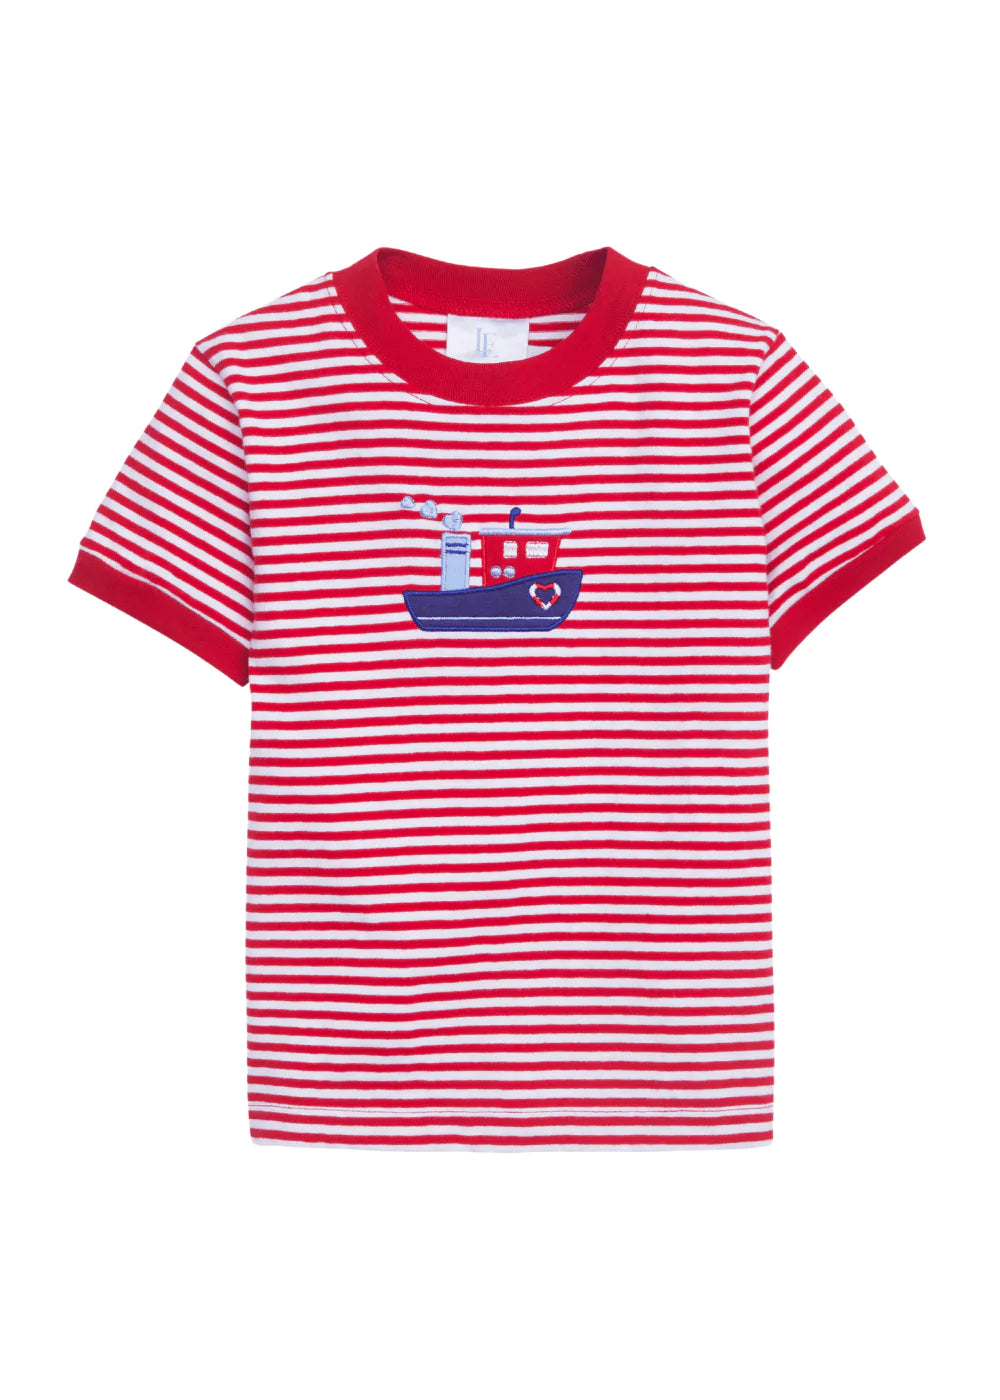 Applique T-Shirt - Tugboat Hearts - Breckenridge Baby